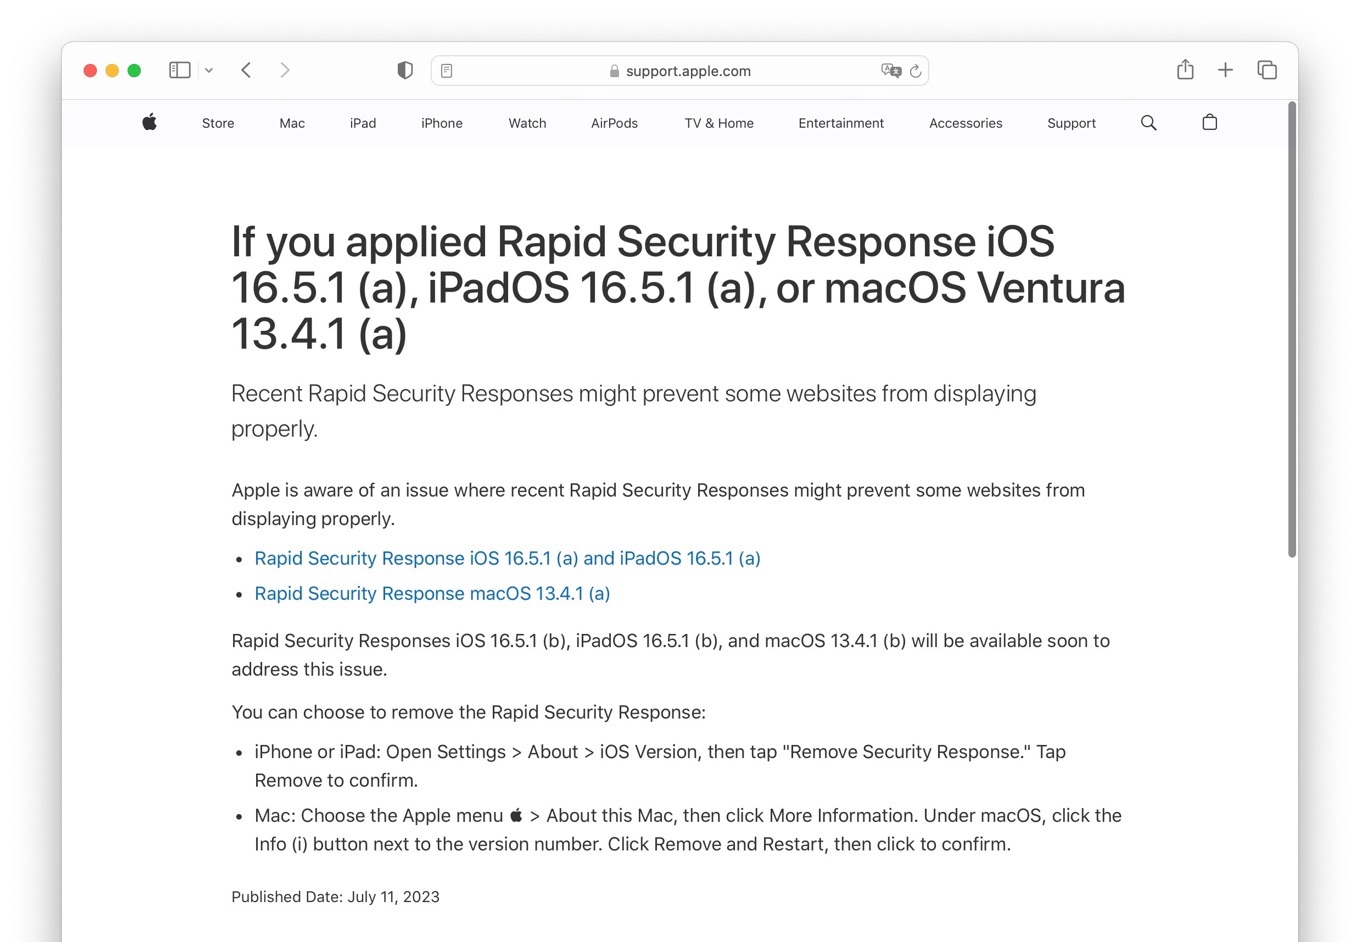 If you applied Rapid Security Response iOS 16.5.1 (a), iPadOS 16.5.1 (a), or macOS Ventura 13.4.1 (a)